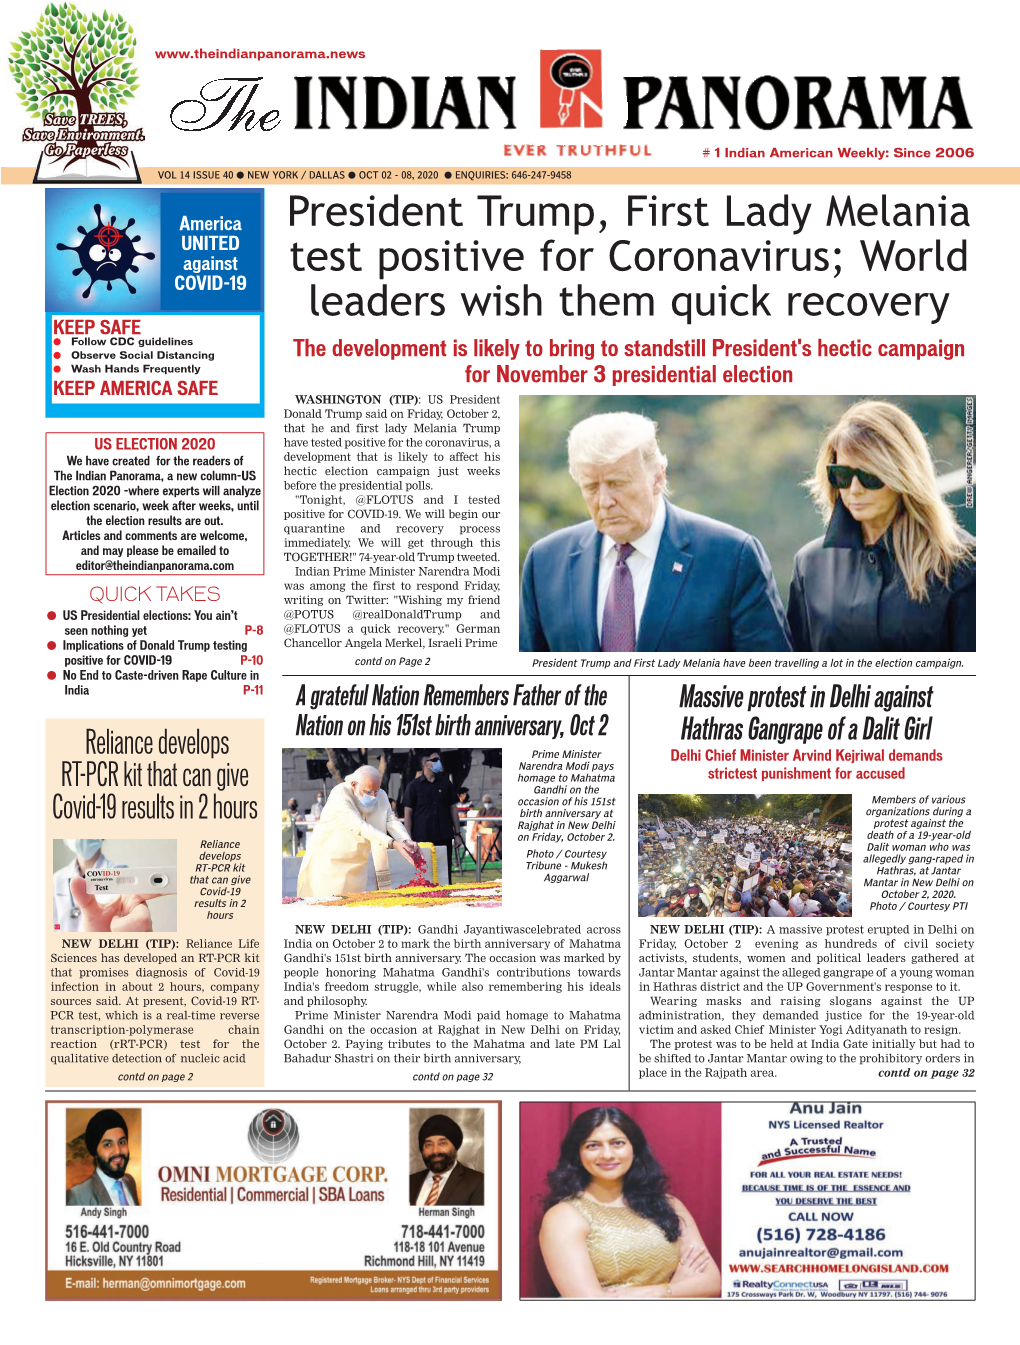 President Trump, First Lady Melania Test Positive